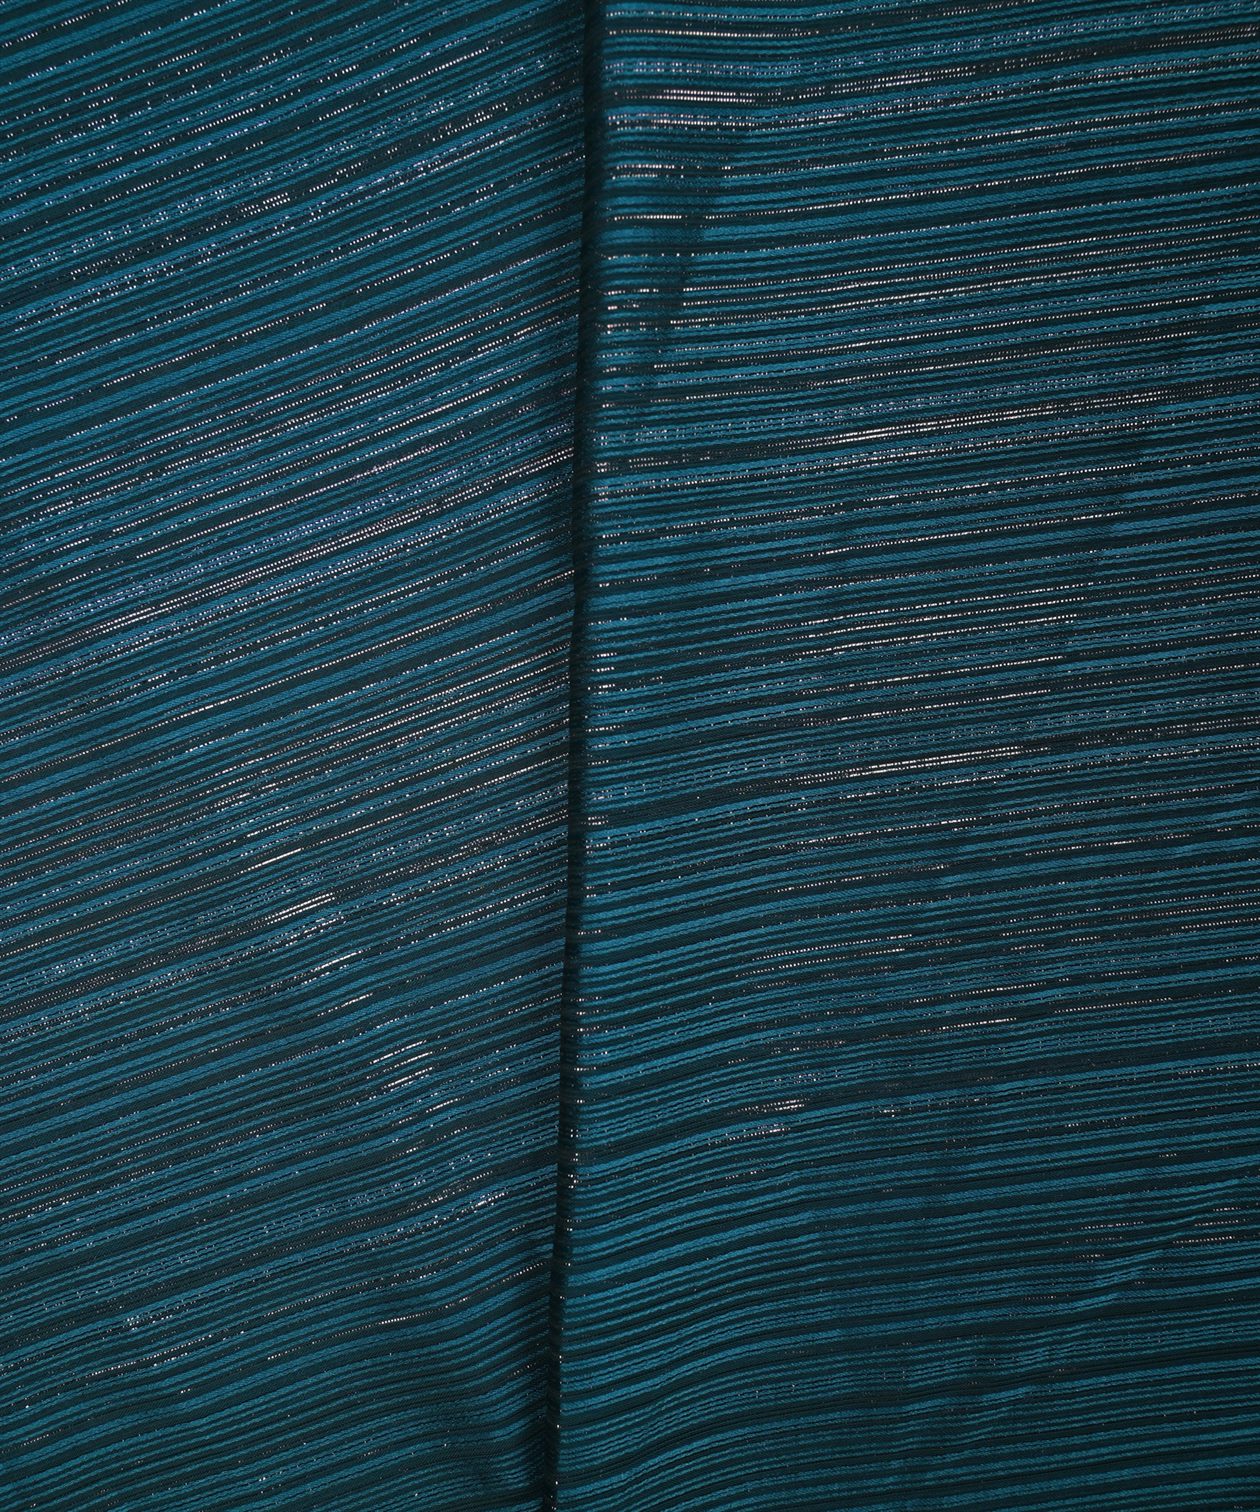 Petrol blue Georgette fabric with Satin patta